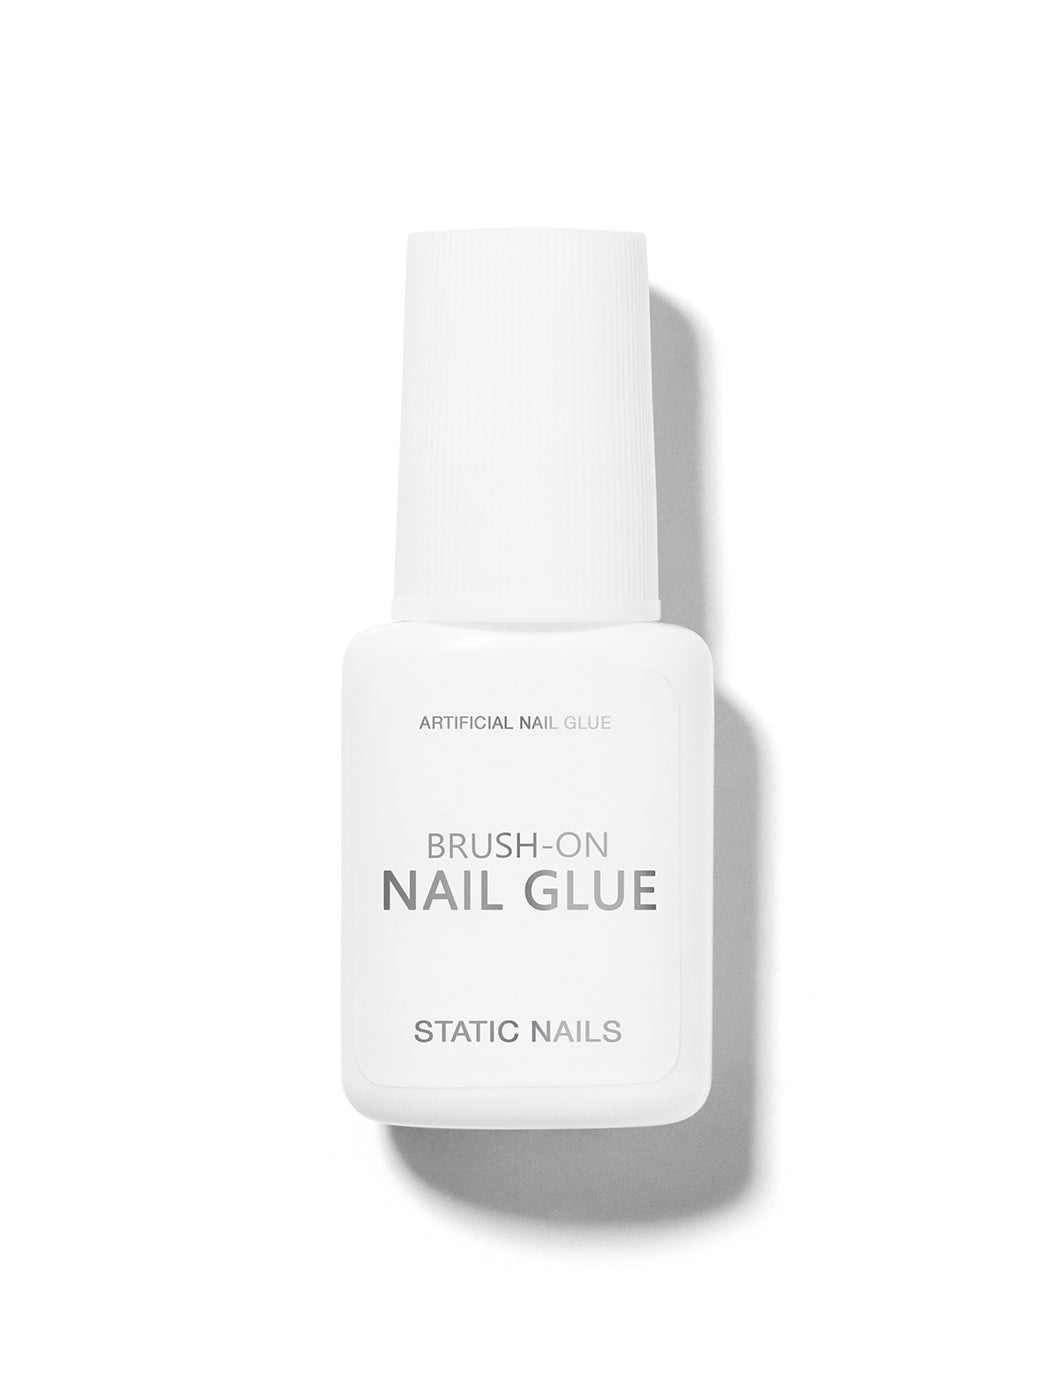 White brush-on nail glue bottle,  